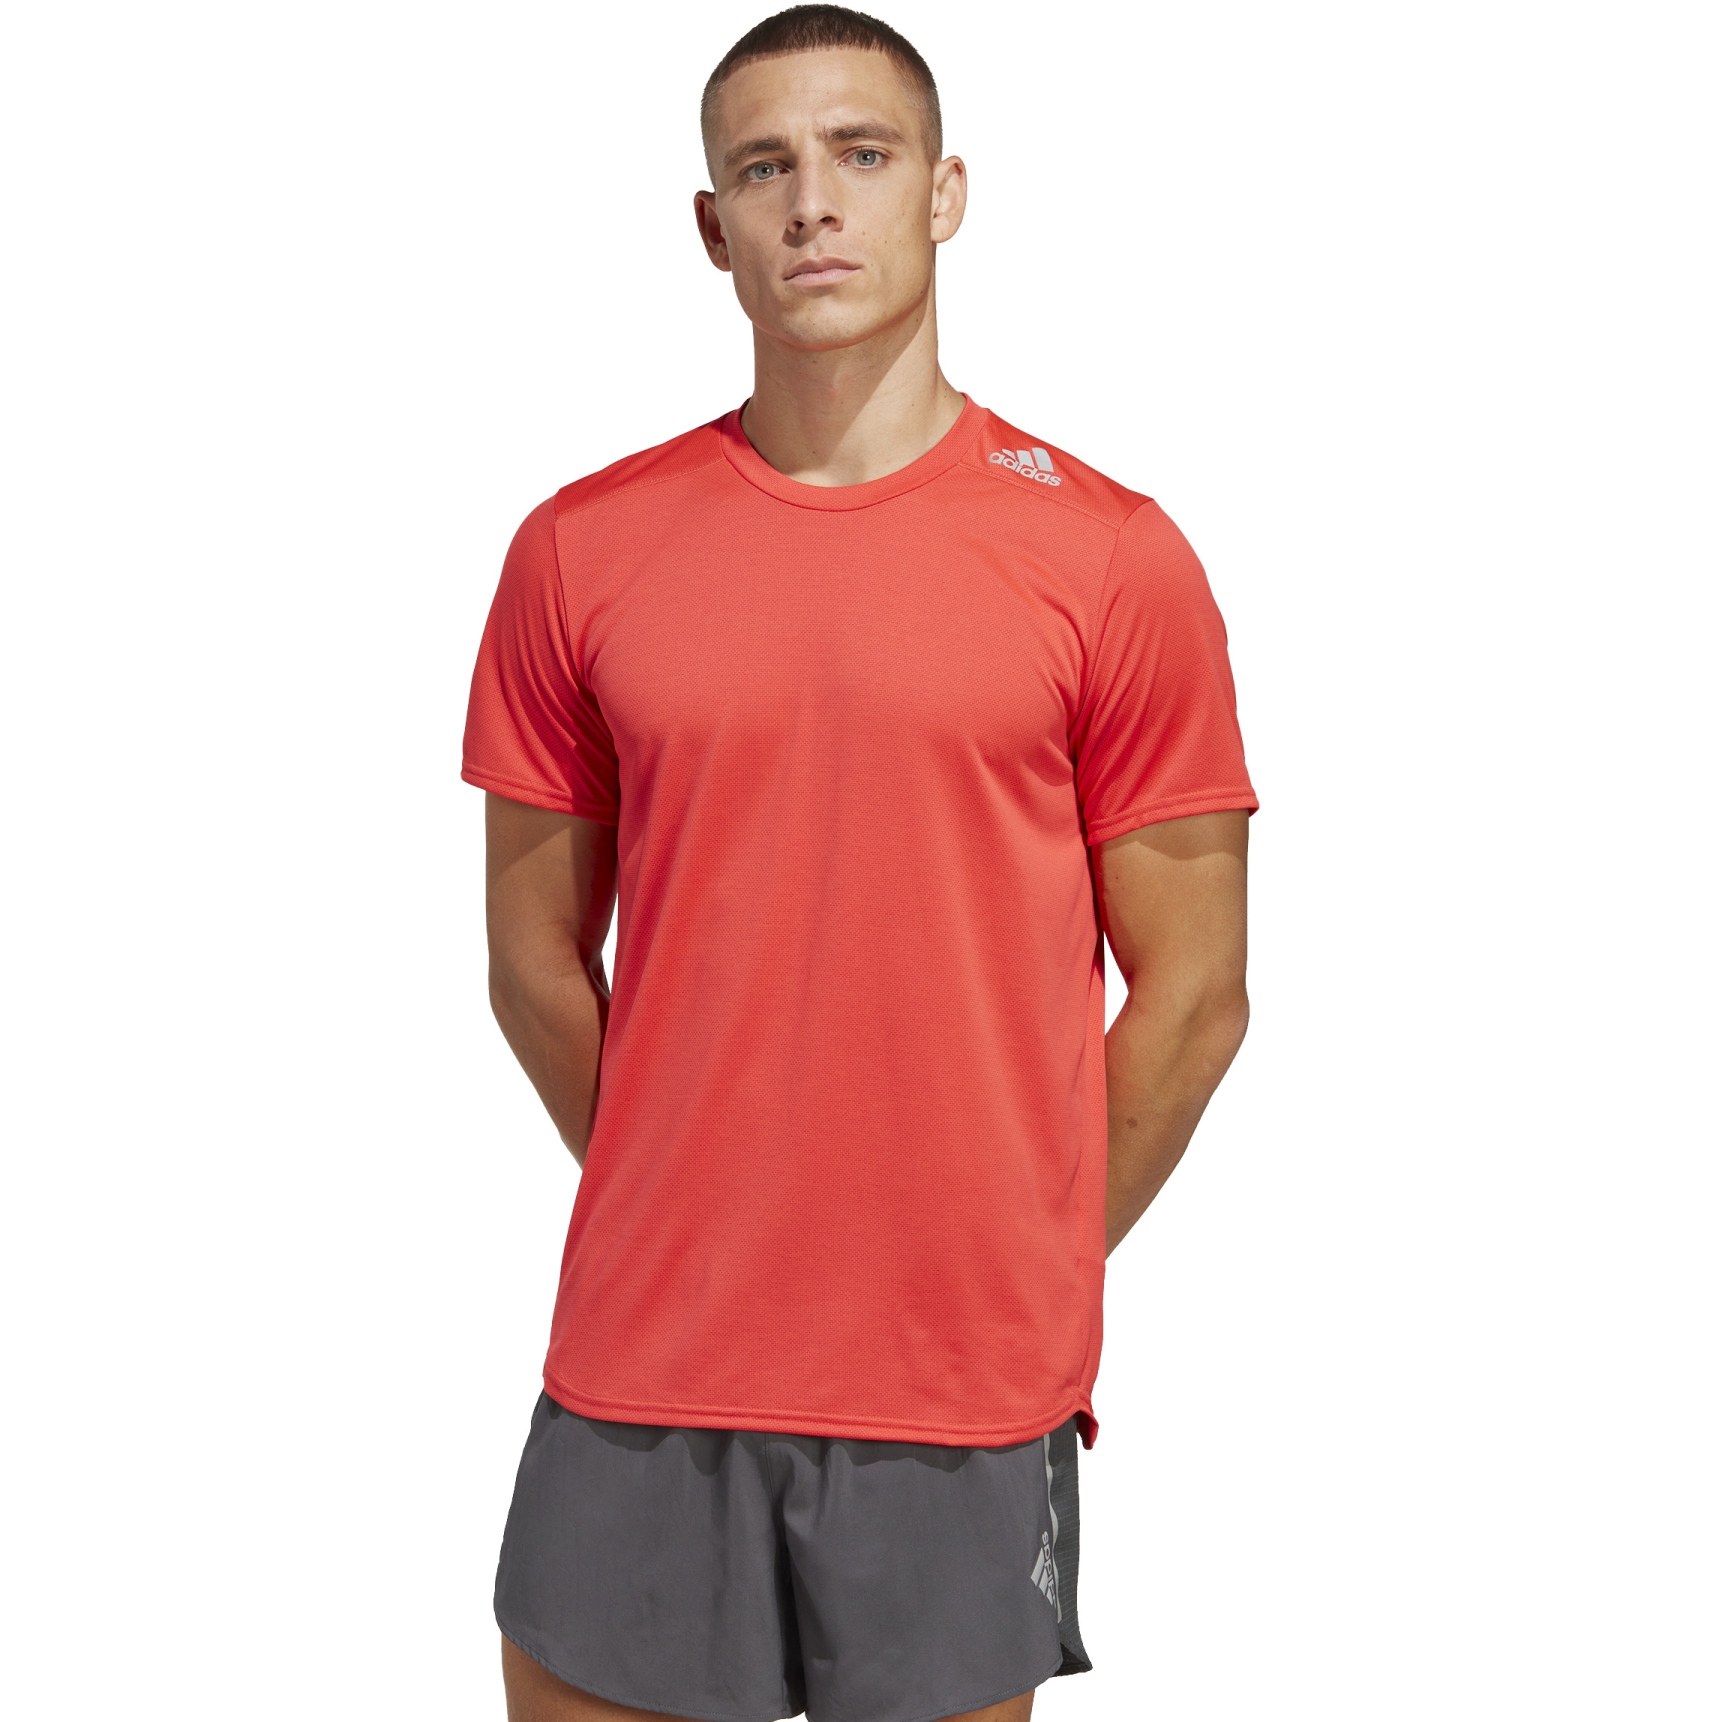 Productfoto van adidas Designed 4 Running Shirt Heren - bright red IB8940